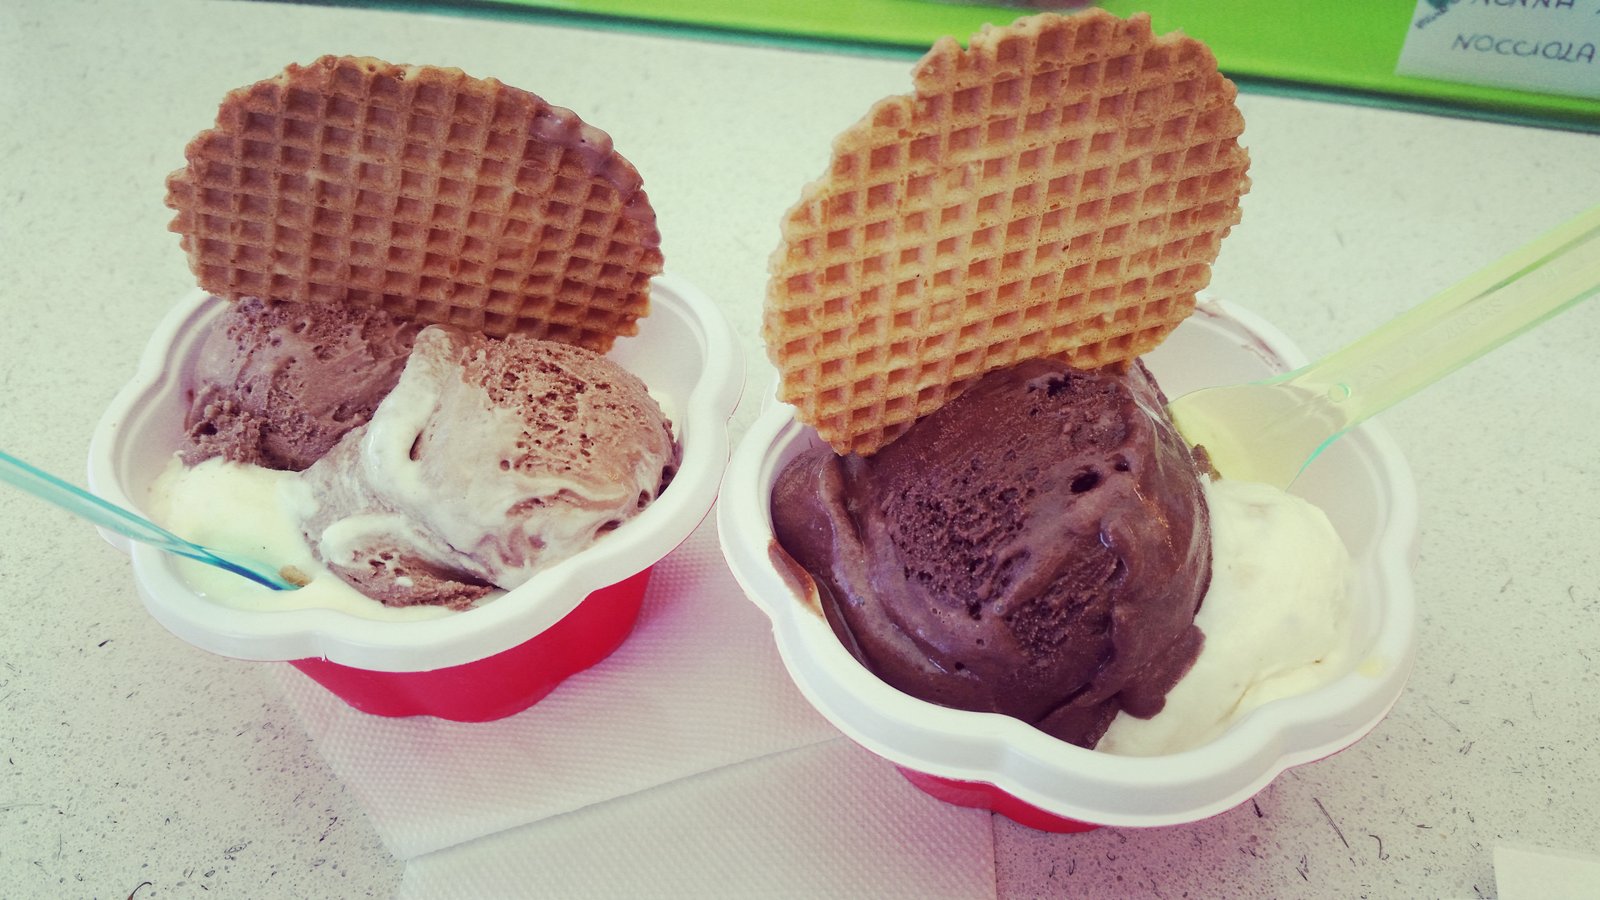 gelato vs ice cream. ouritalianjourney.com